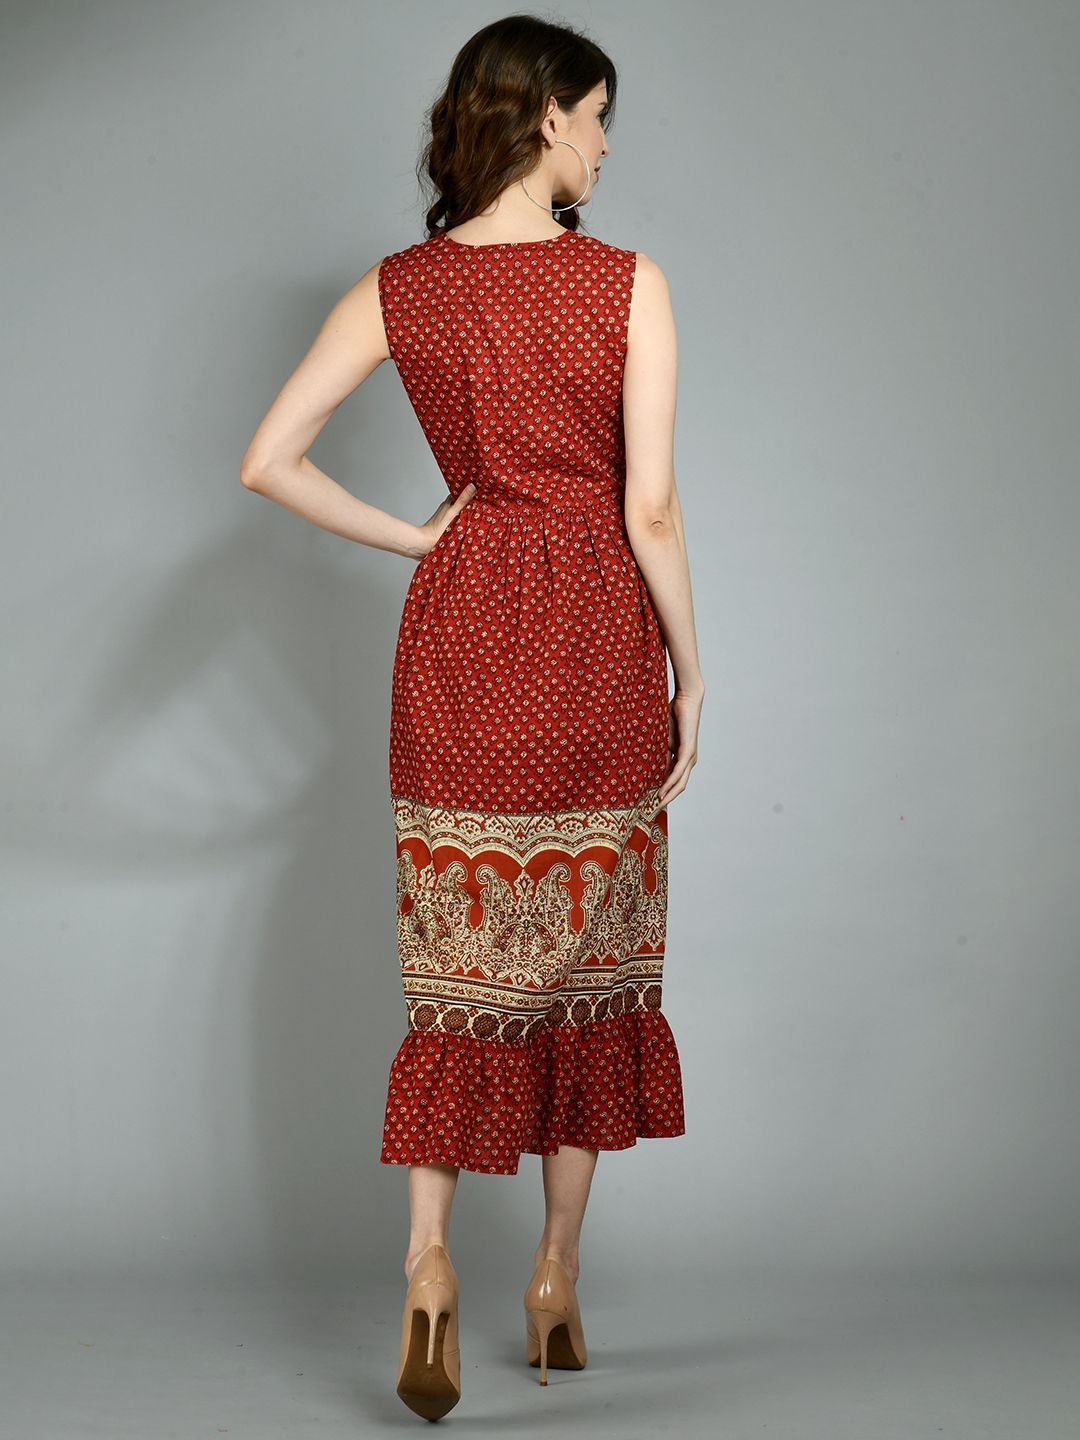 Women's Light Maroon Cotton Printed Sleeveless Round Neck Casual Dress - Myshka